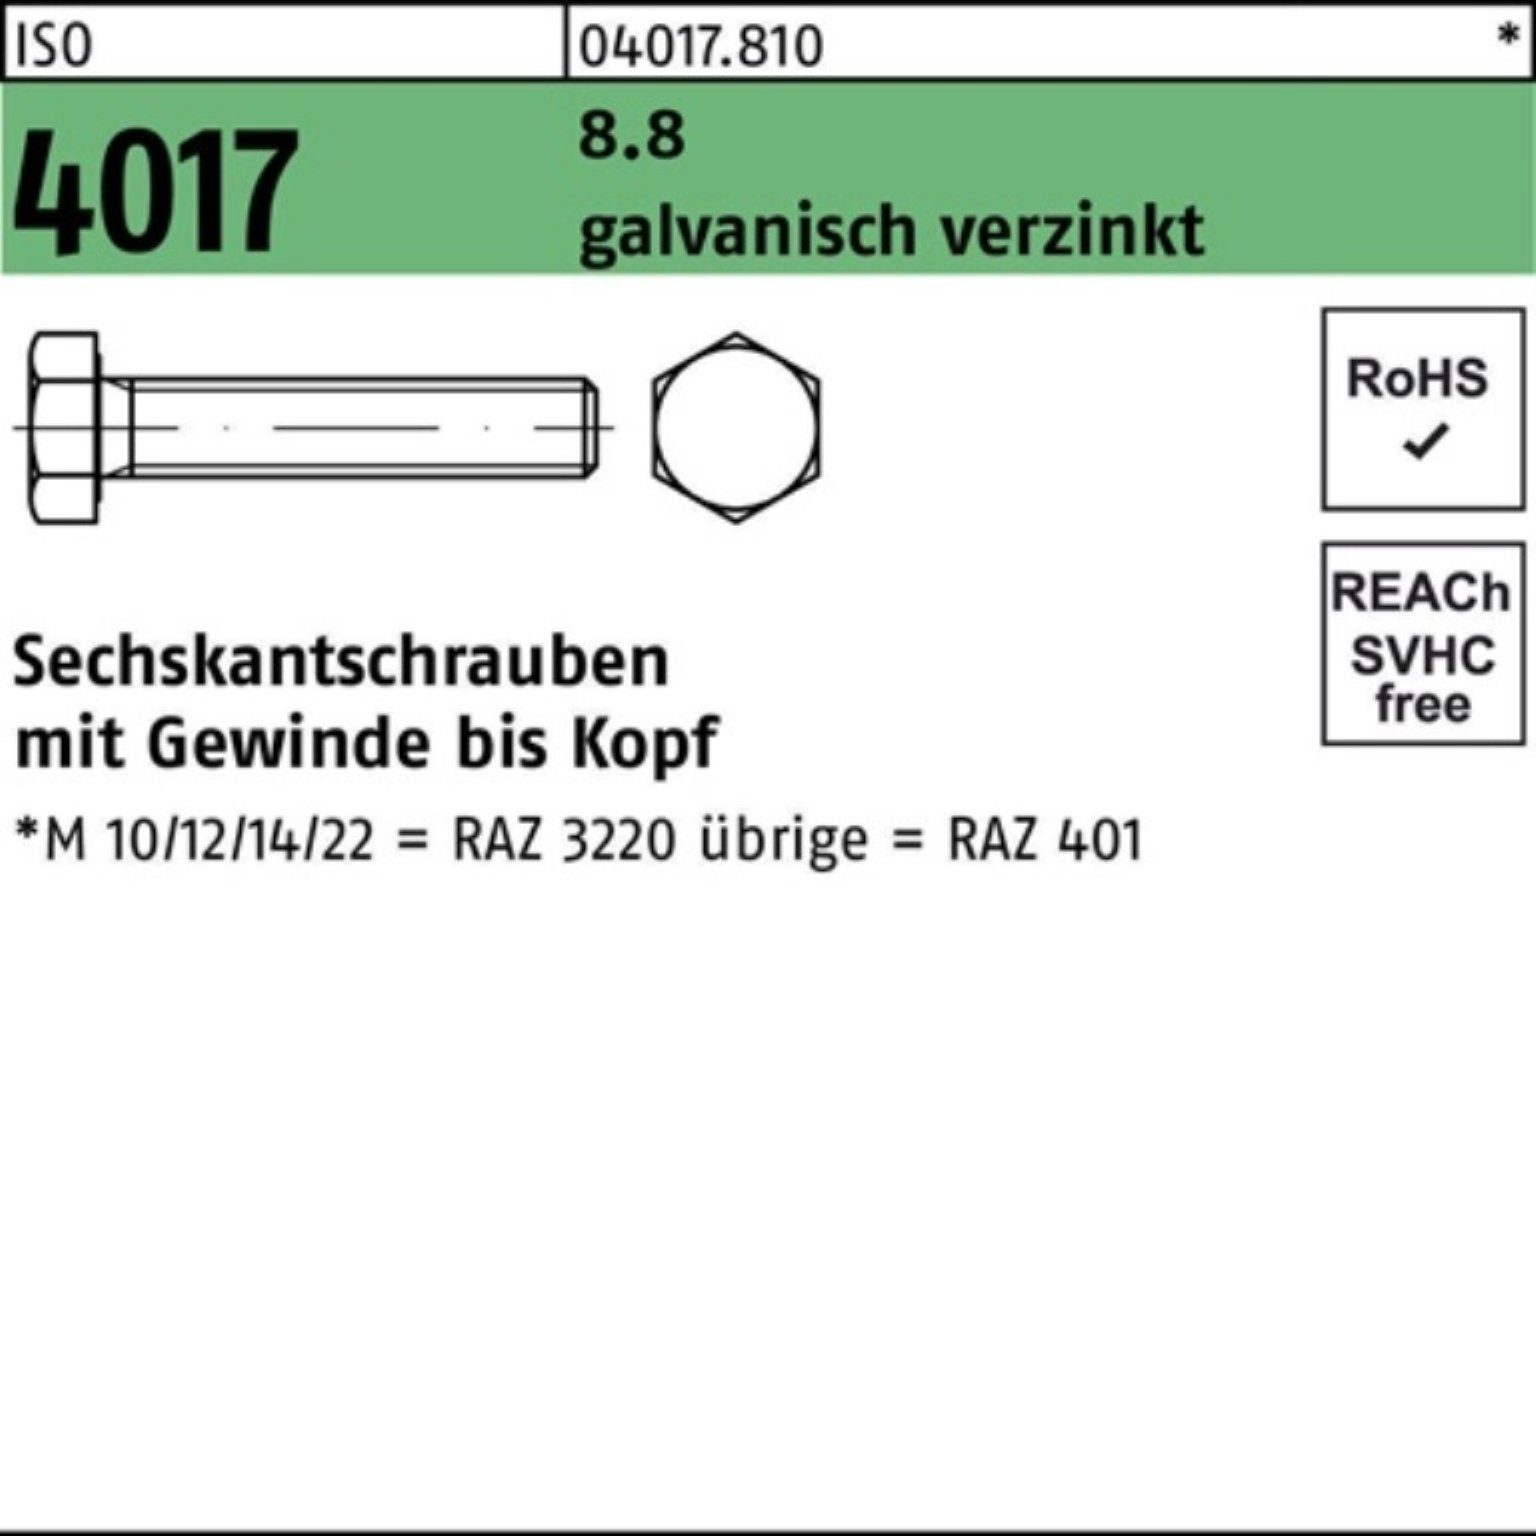 ISO Bufab 8.8 Pack 1 110 galv.verz. VG Sechskantschraube 100er 4017 Sechskantschraube St M27x